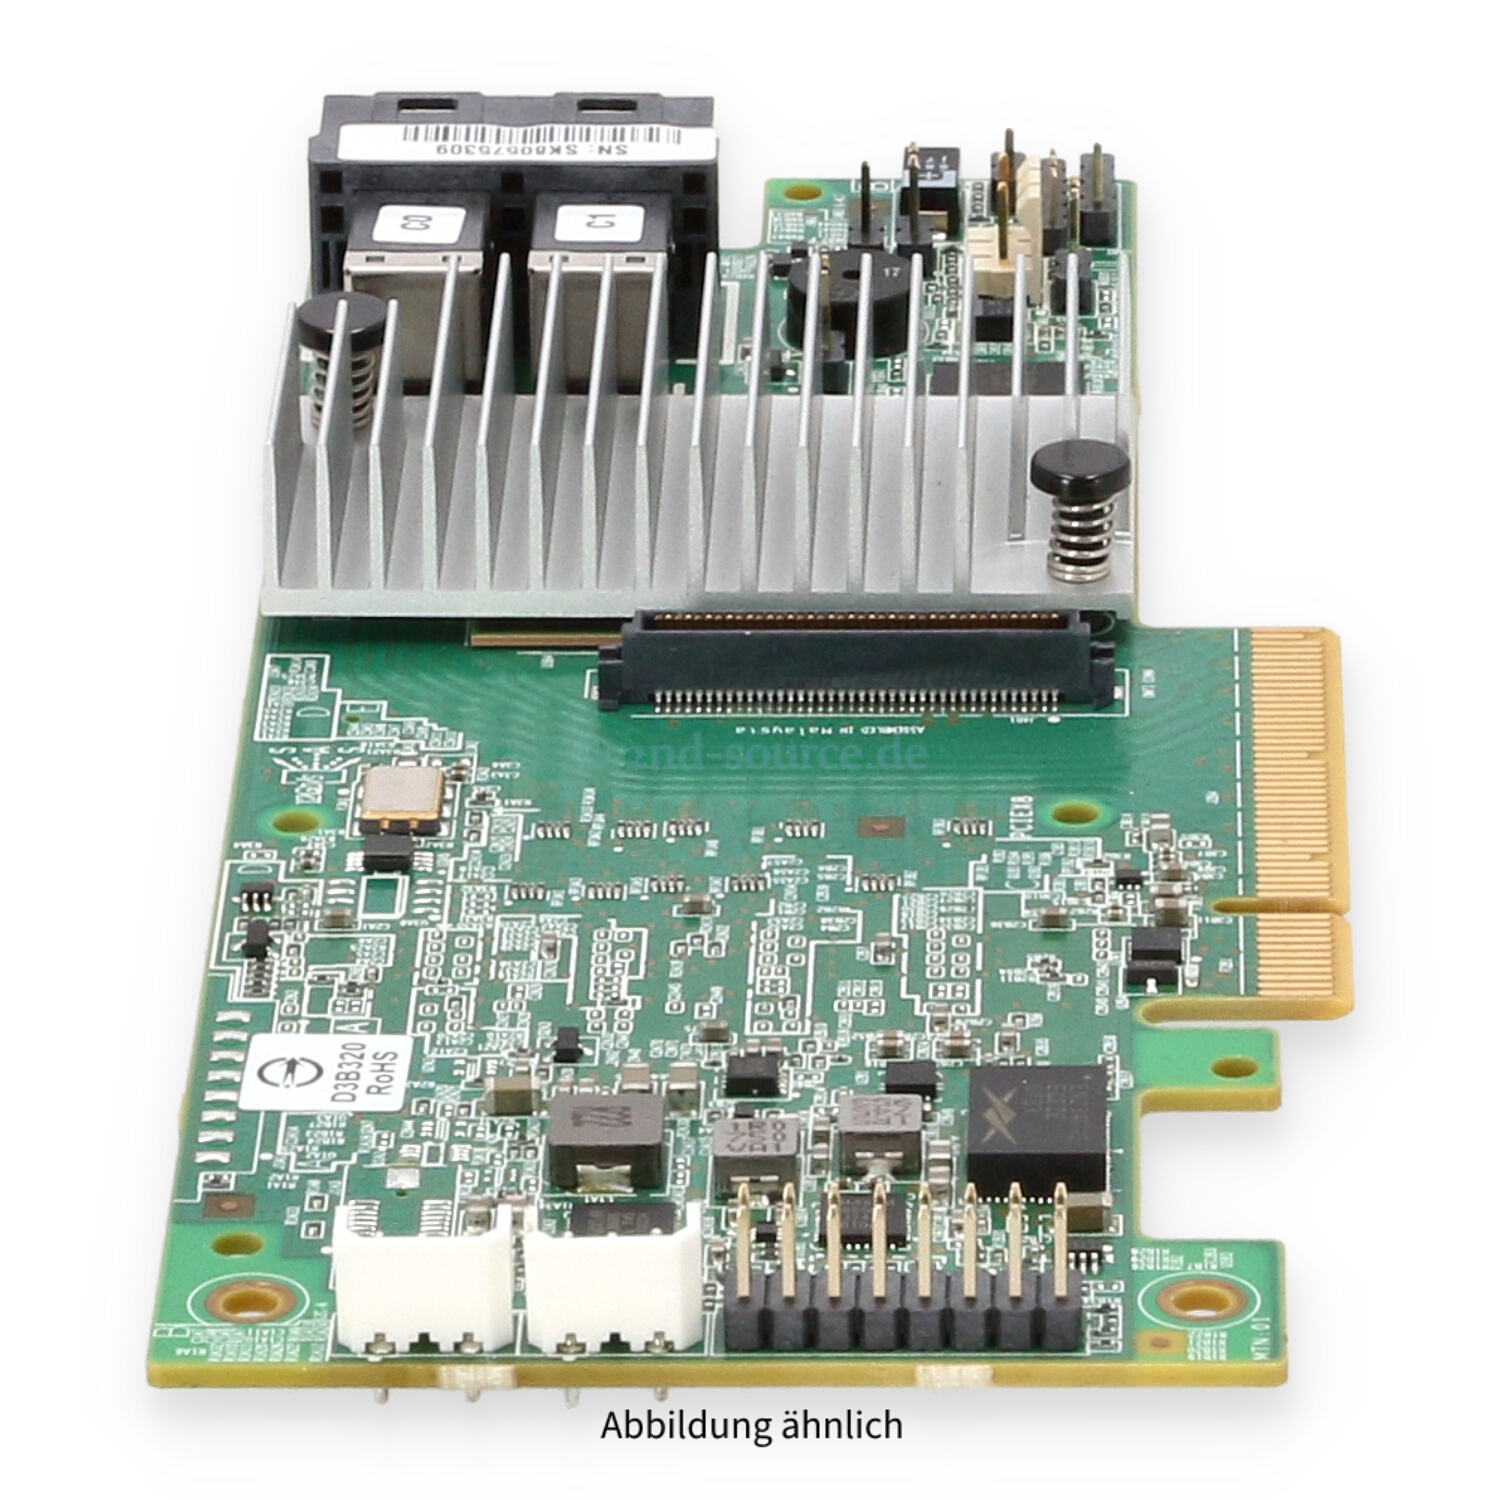 Lenovo 730-8i 12G SAS PCIe 1GB RAID Controller 7Y37A01083 01KN506